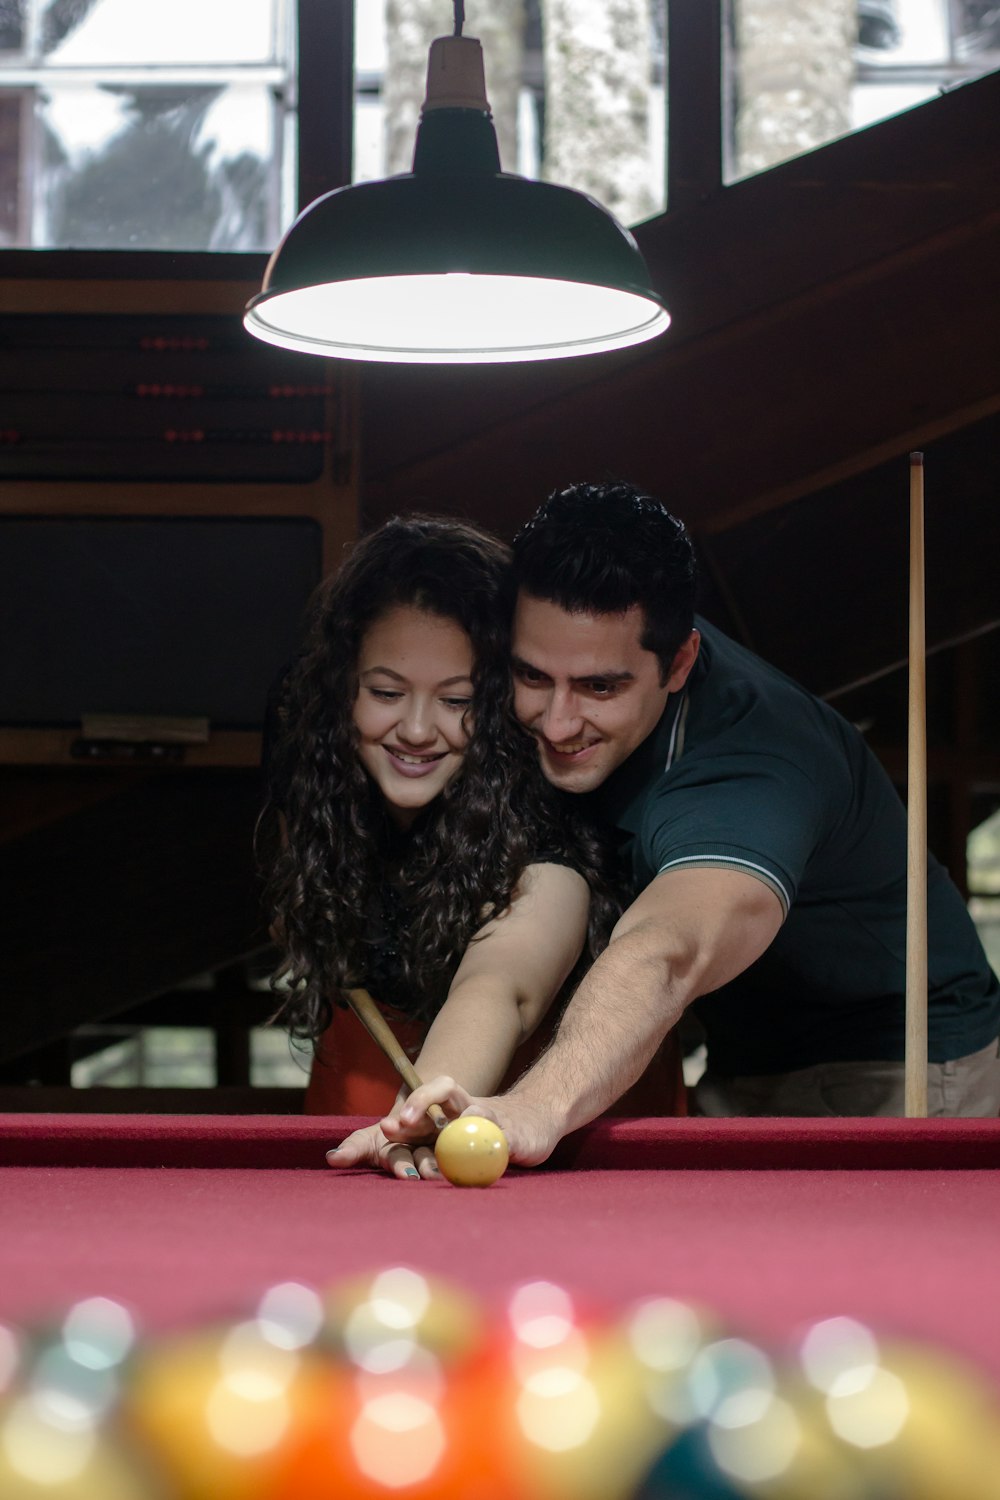 man teaching a woman how to play pool